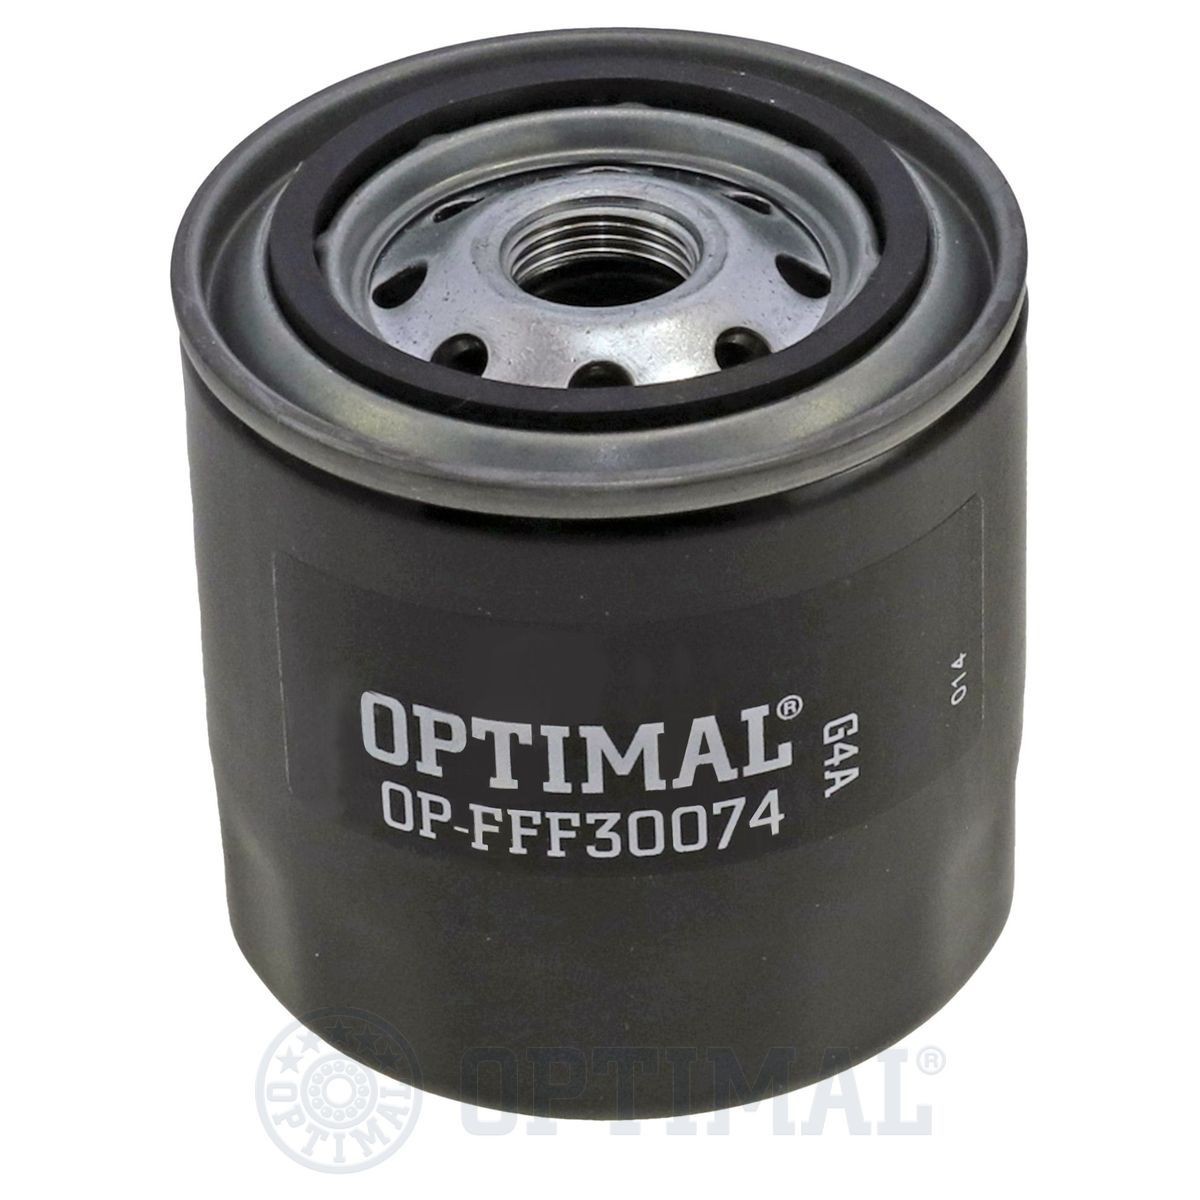 OPTIMAL OP-FFF30074 Fuel filter 16403-J2000